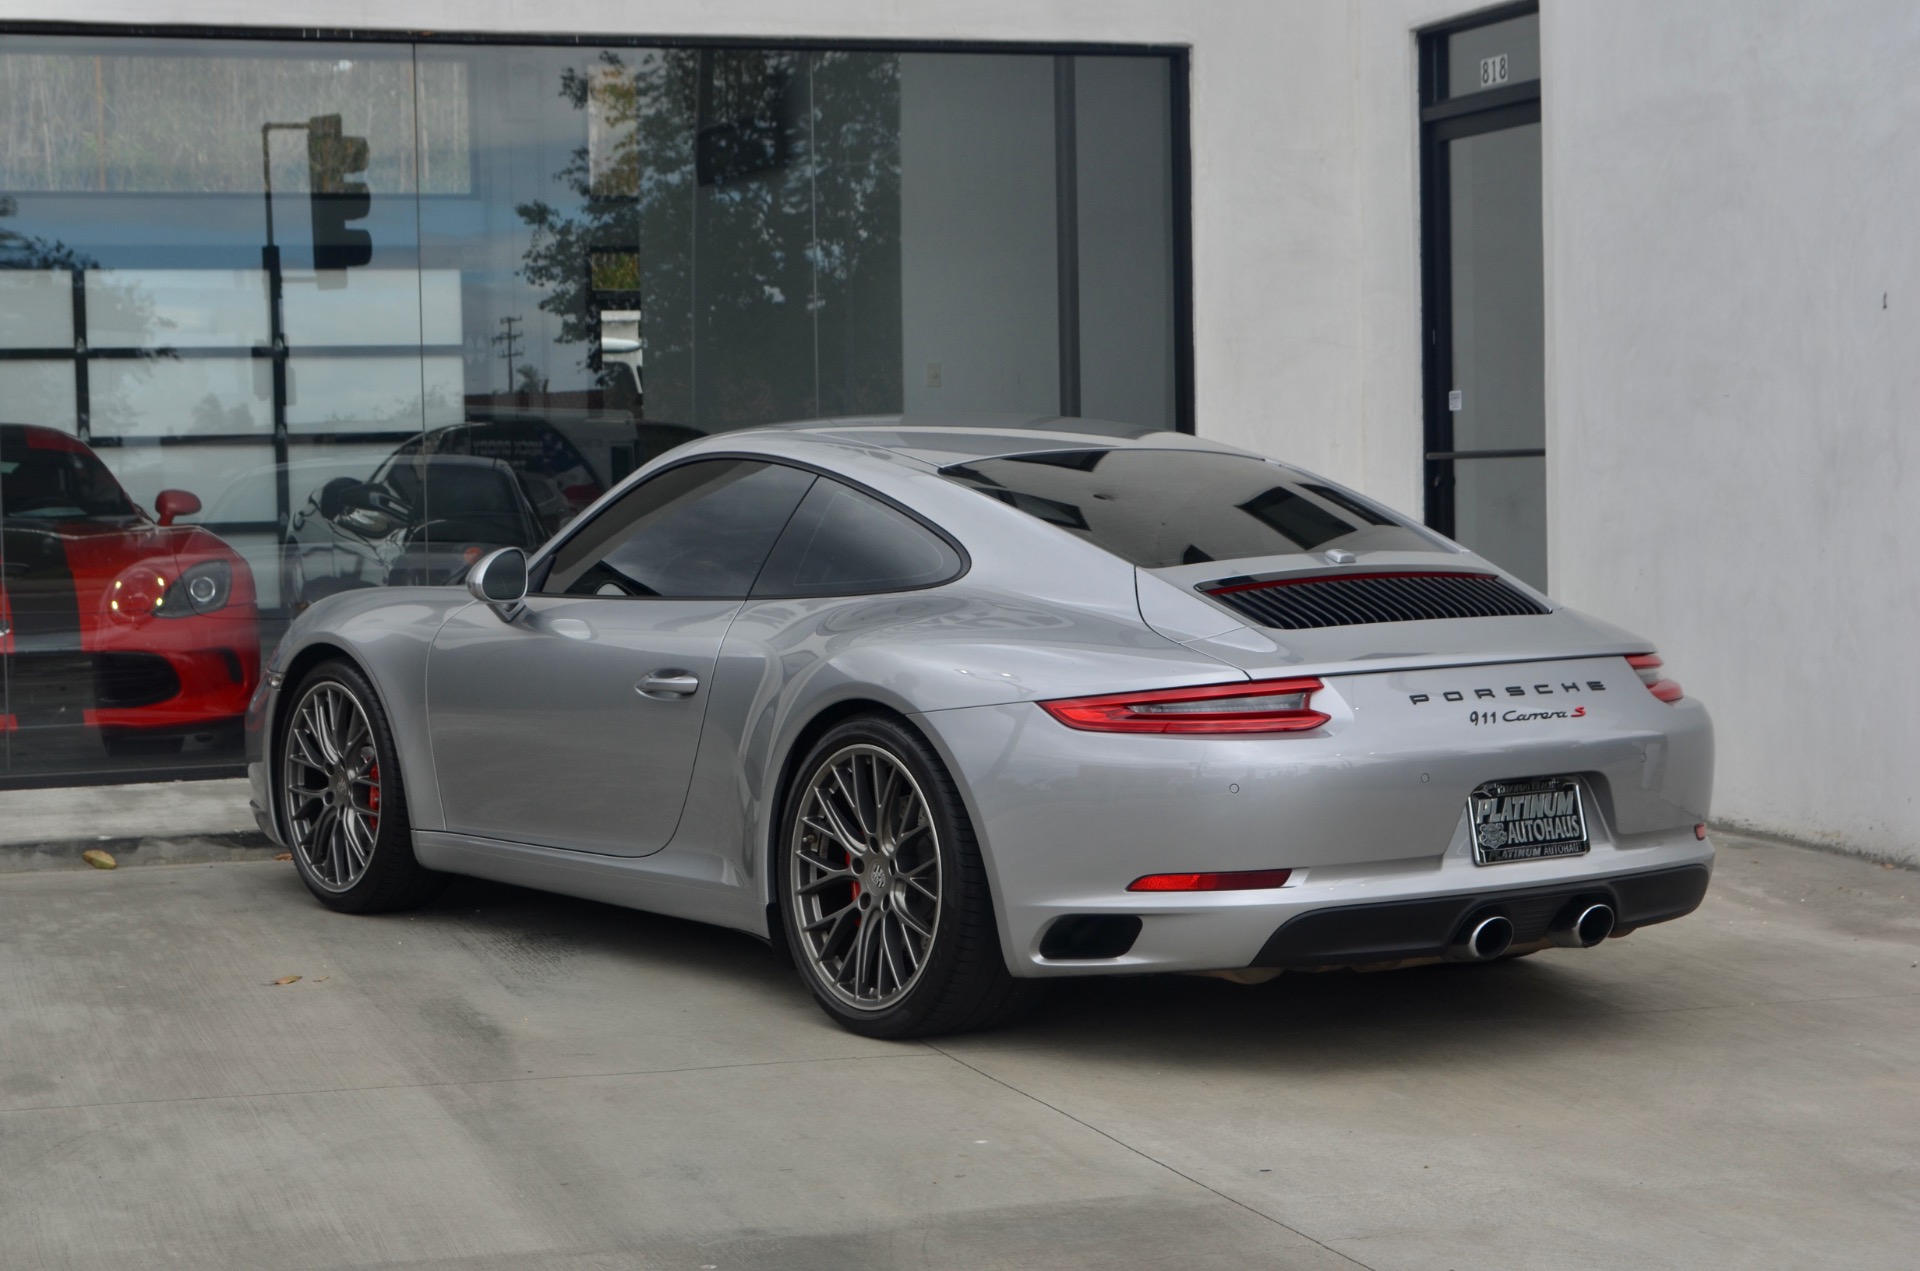 2017 Porsche 911 Carrera S Stock # 7426 for sale near Redondo Beach, CA |  CA Porsche Dealer